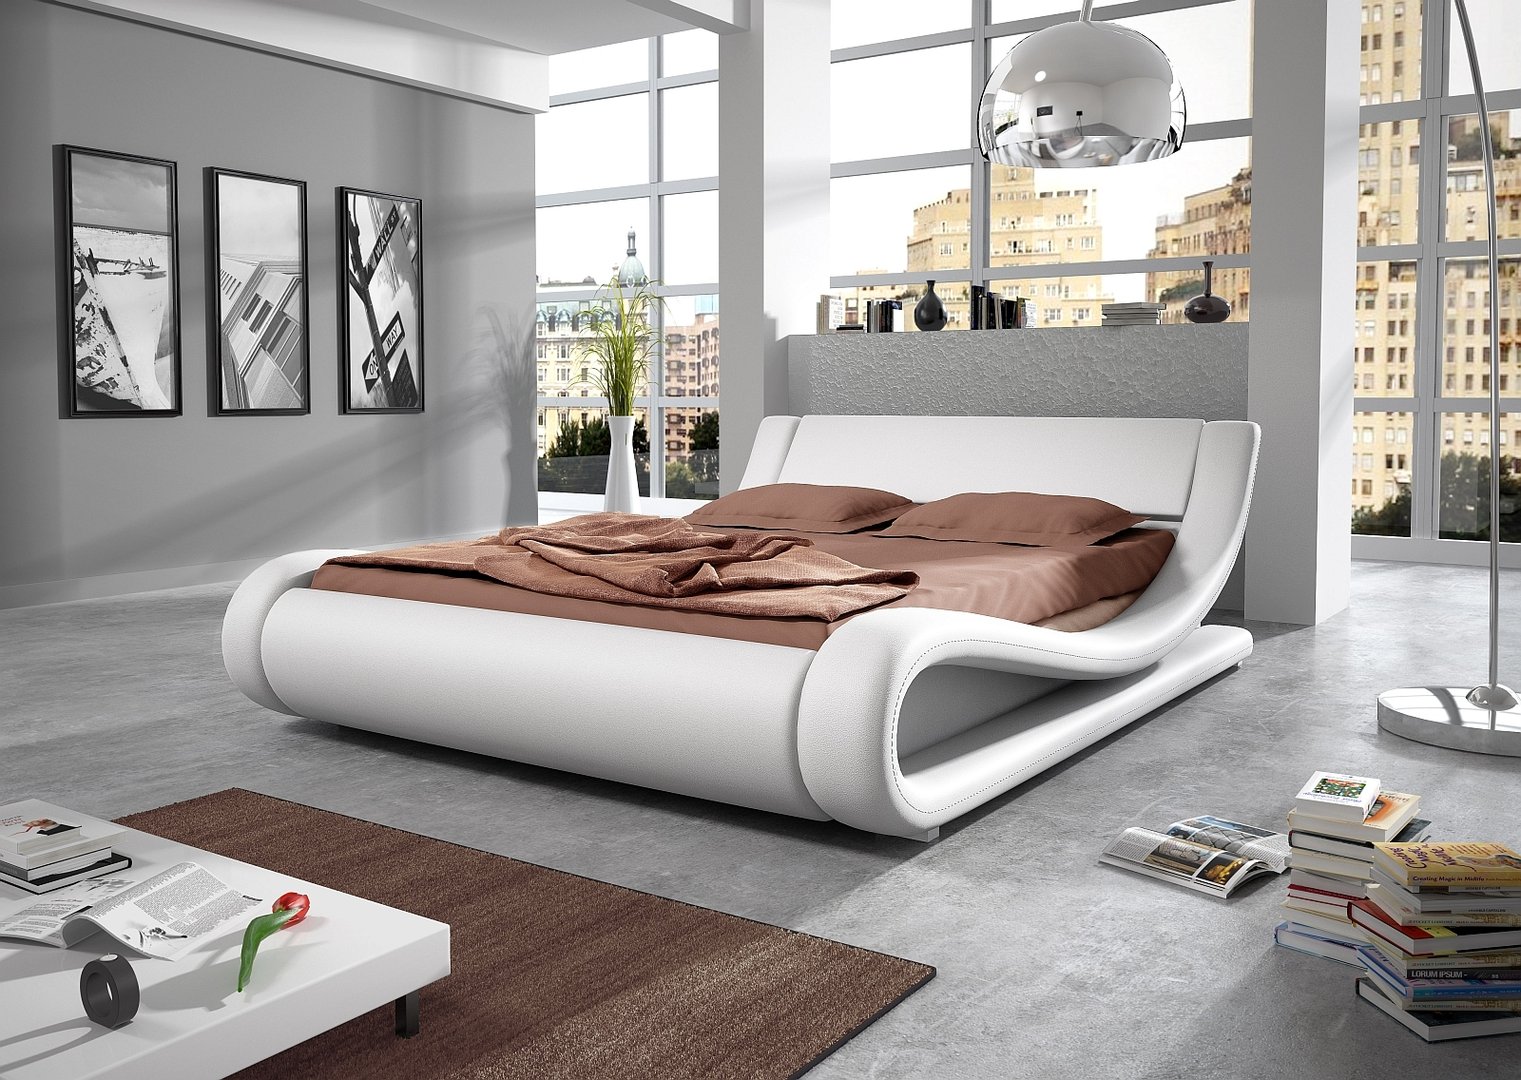 Luxury Unique Bedroom Furniturein Home Remodel Ideas Withunique